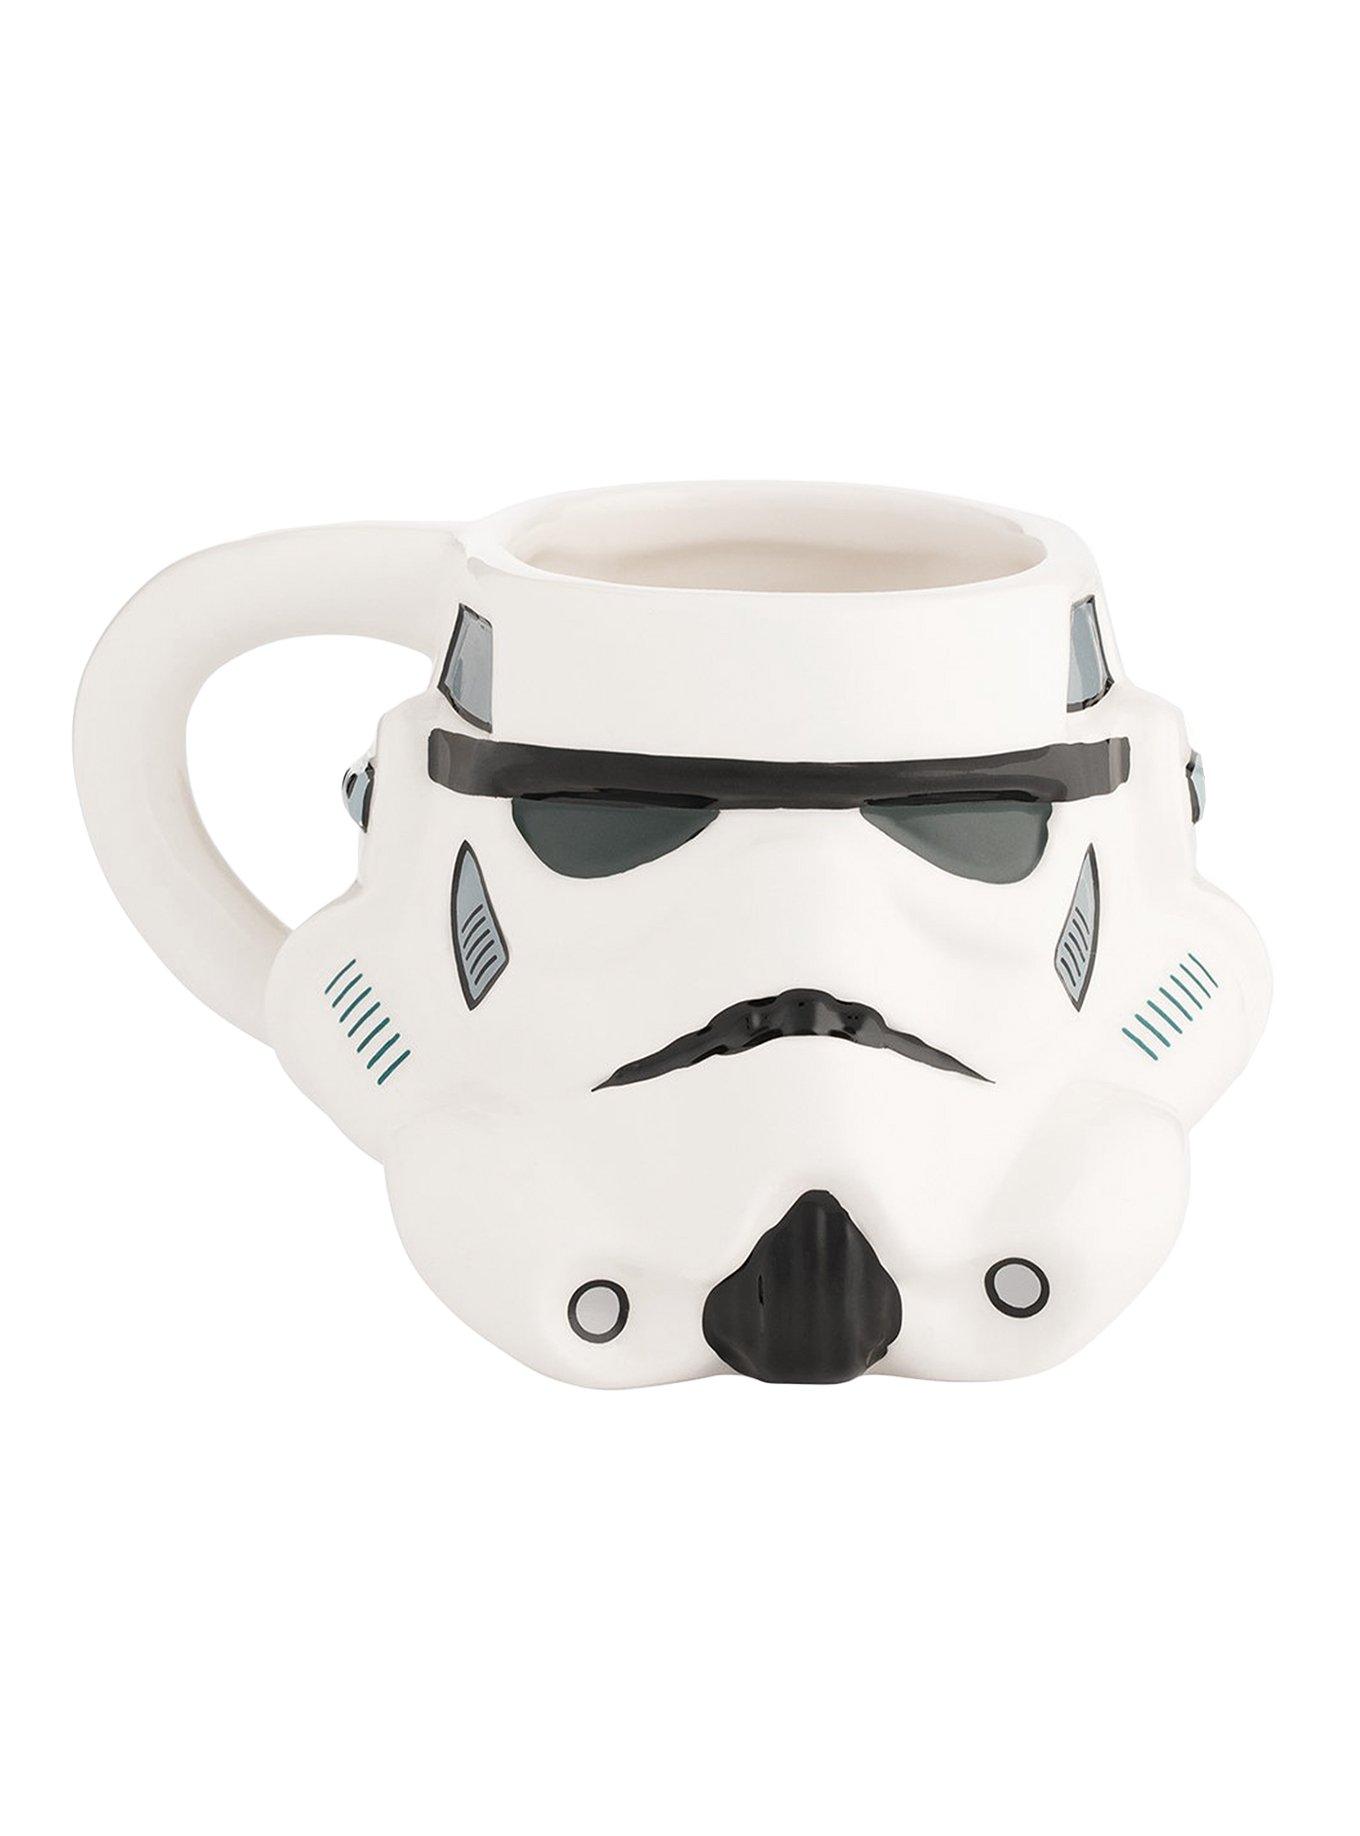 Tazza Mug Stormtrooper Star Wars in Porcellana